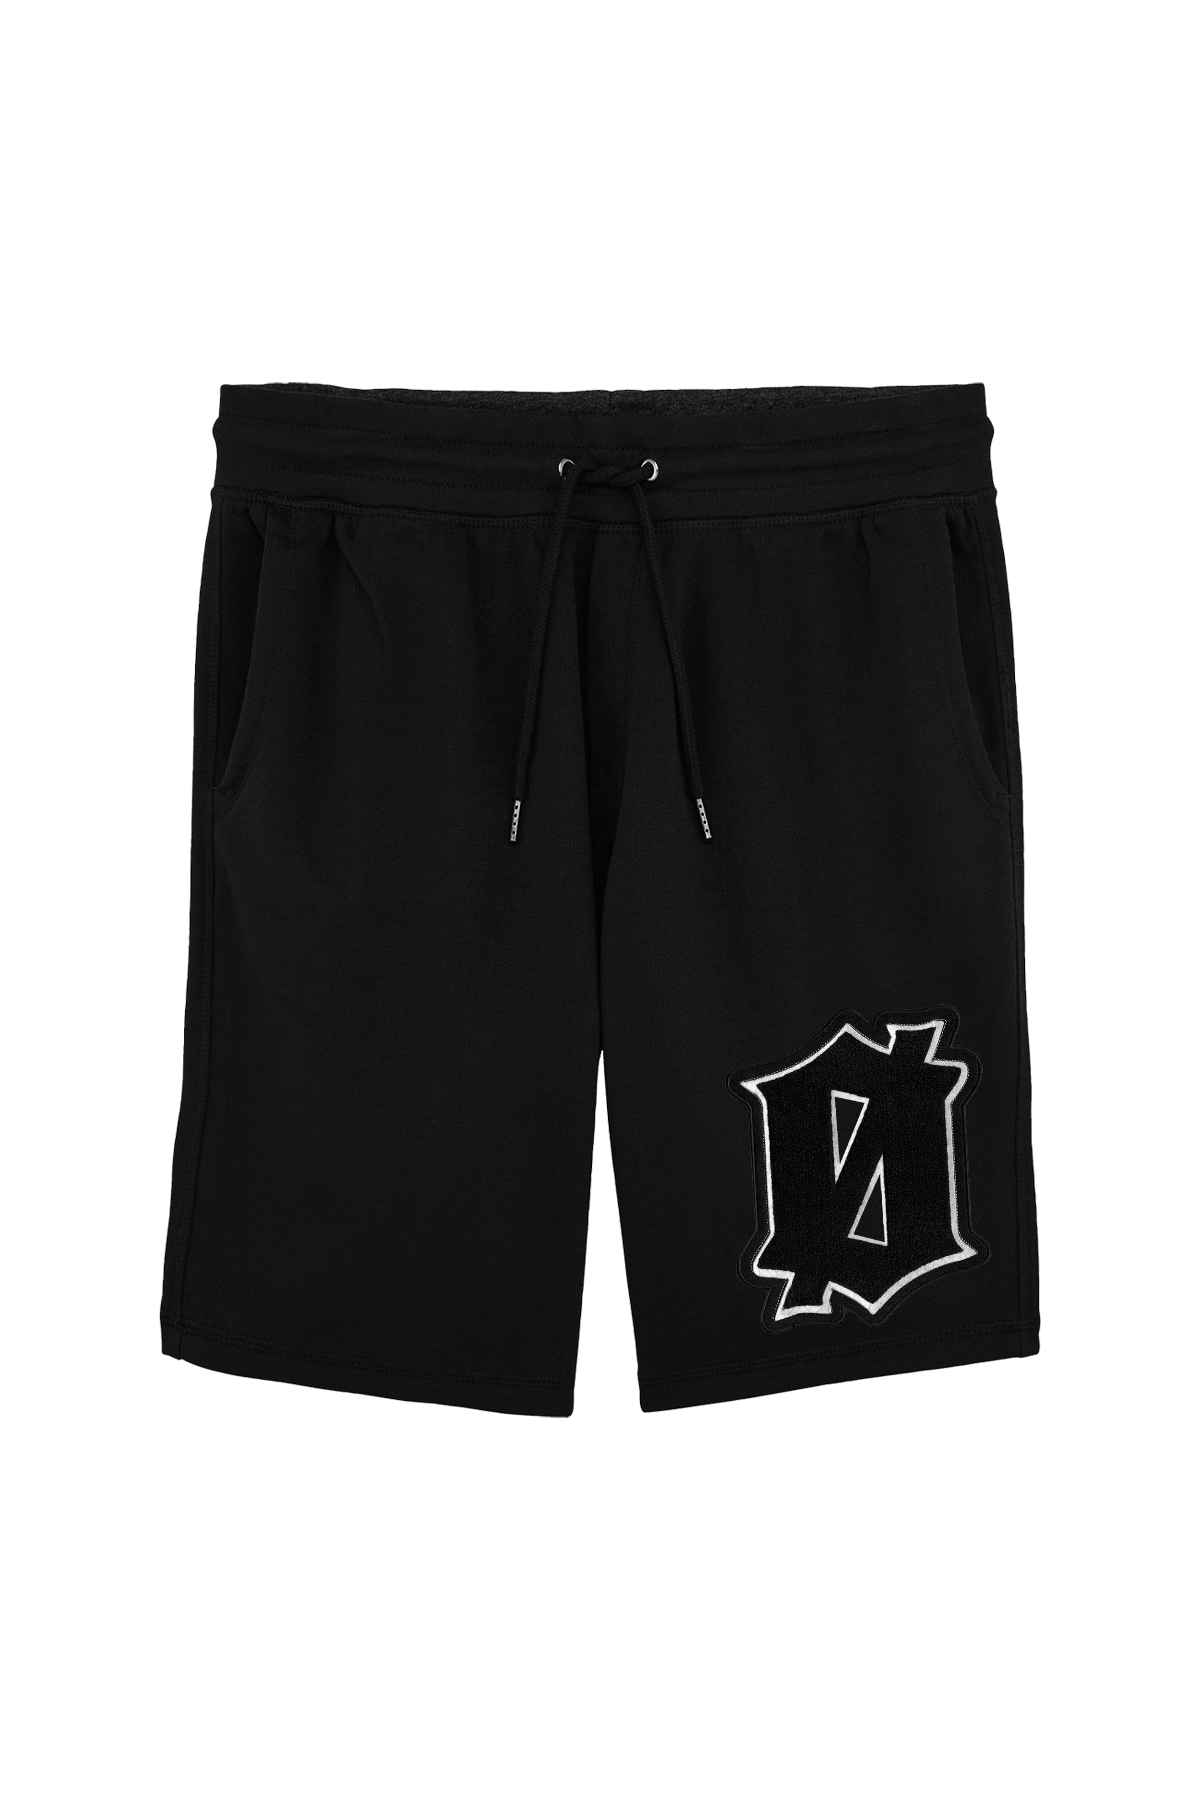 Chenille Logo Black Shorts - Live Look Loud